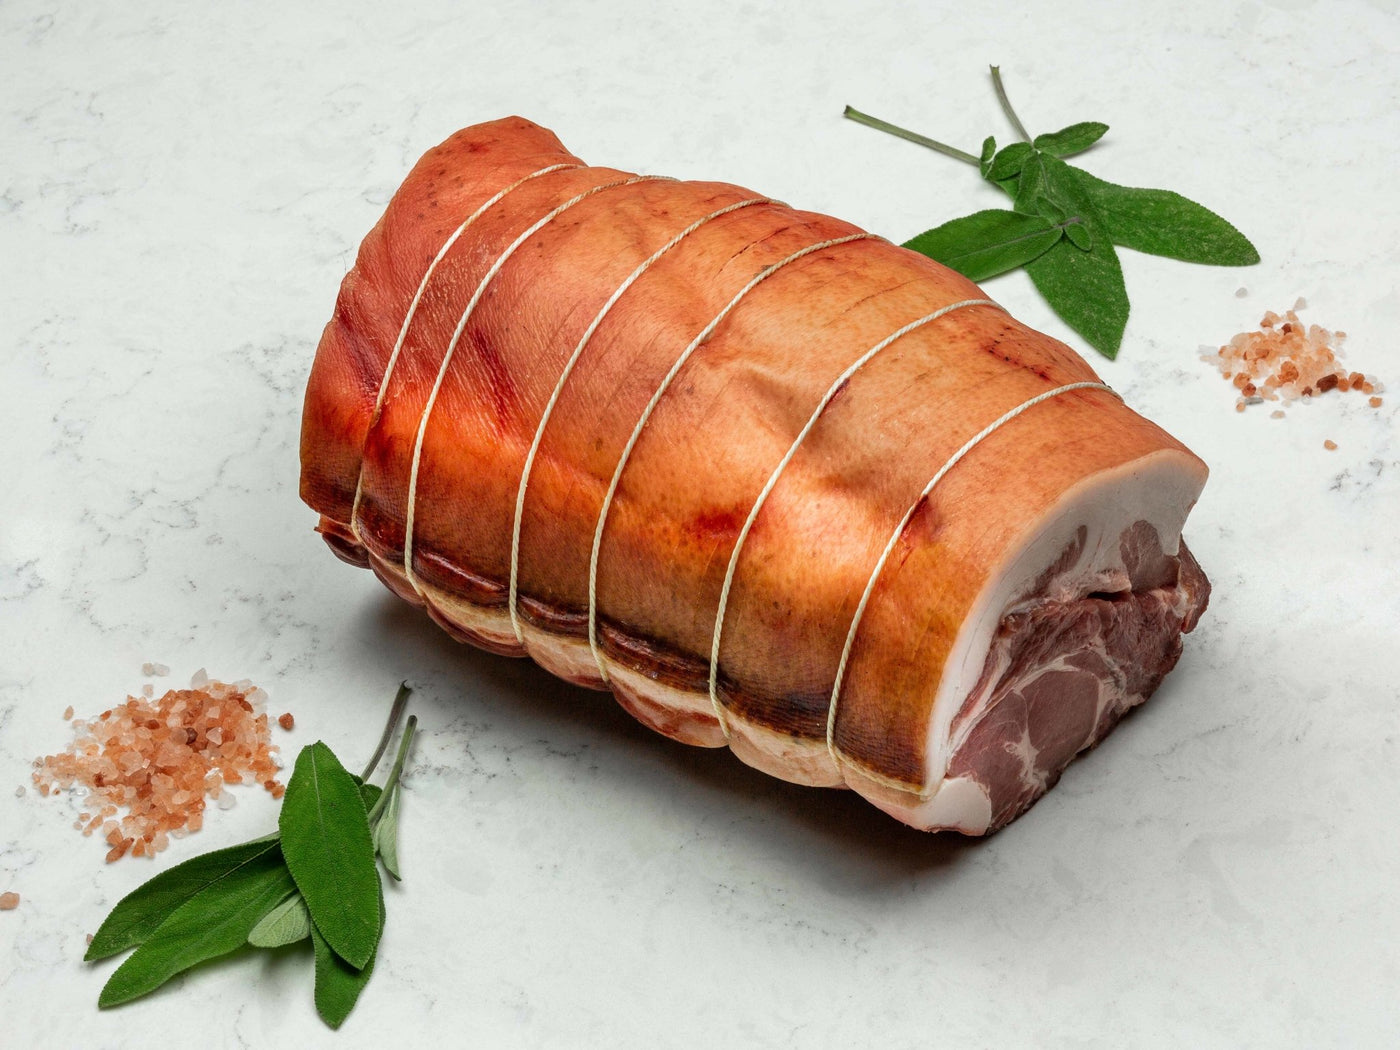 Free Range, Dry-Aged Pork | Thomas Joseph Butchery